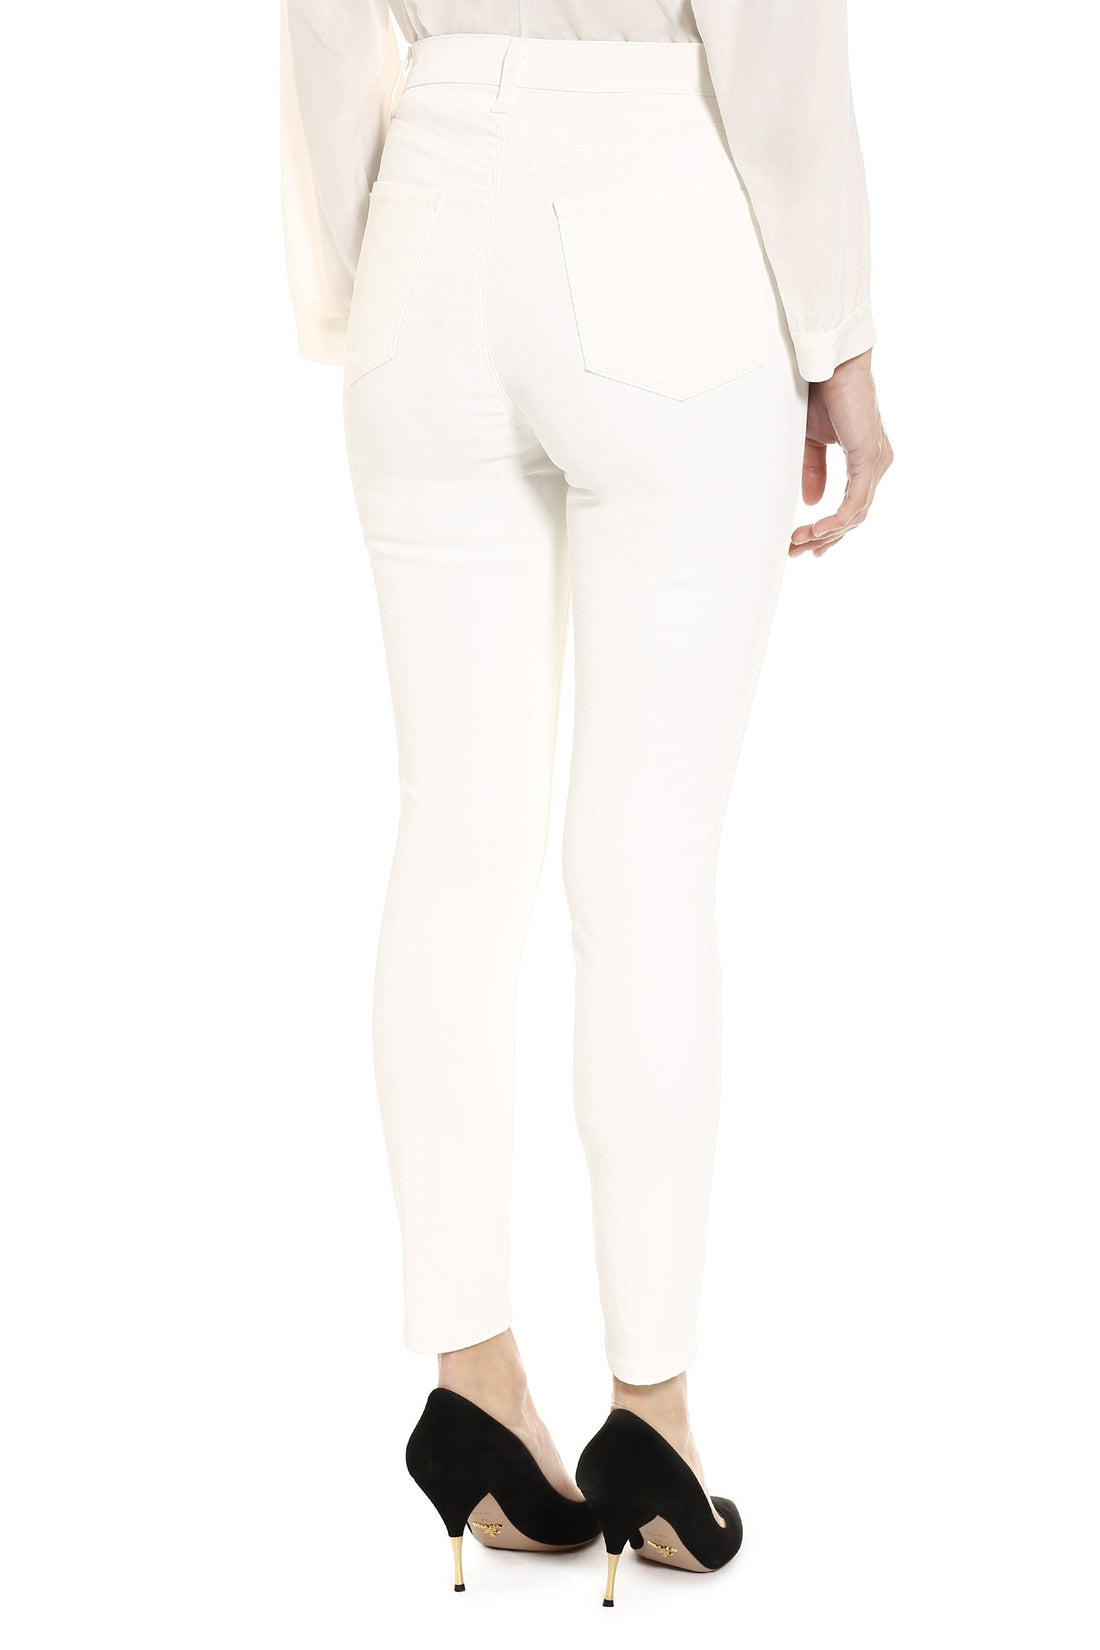 J Brand-OUTLET-SALE-Lillie cropped skinny jeans-ARCHIVIST